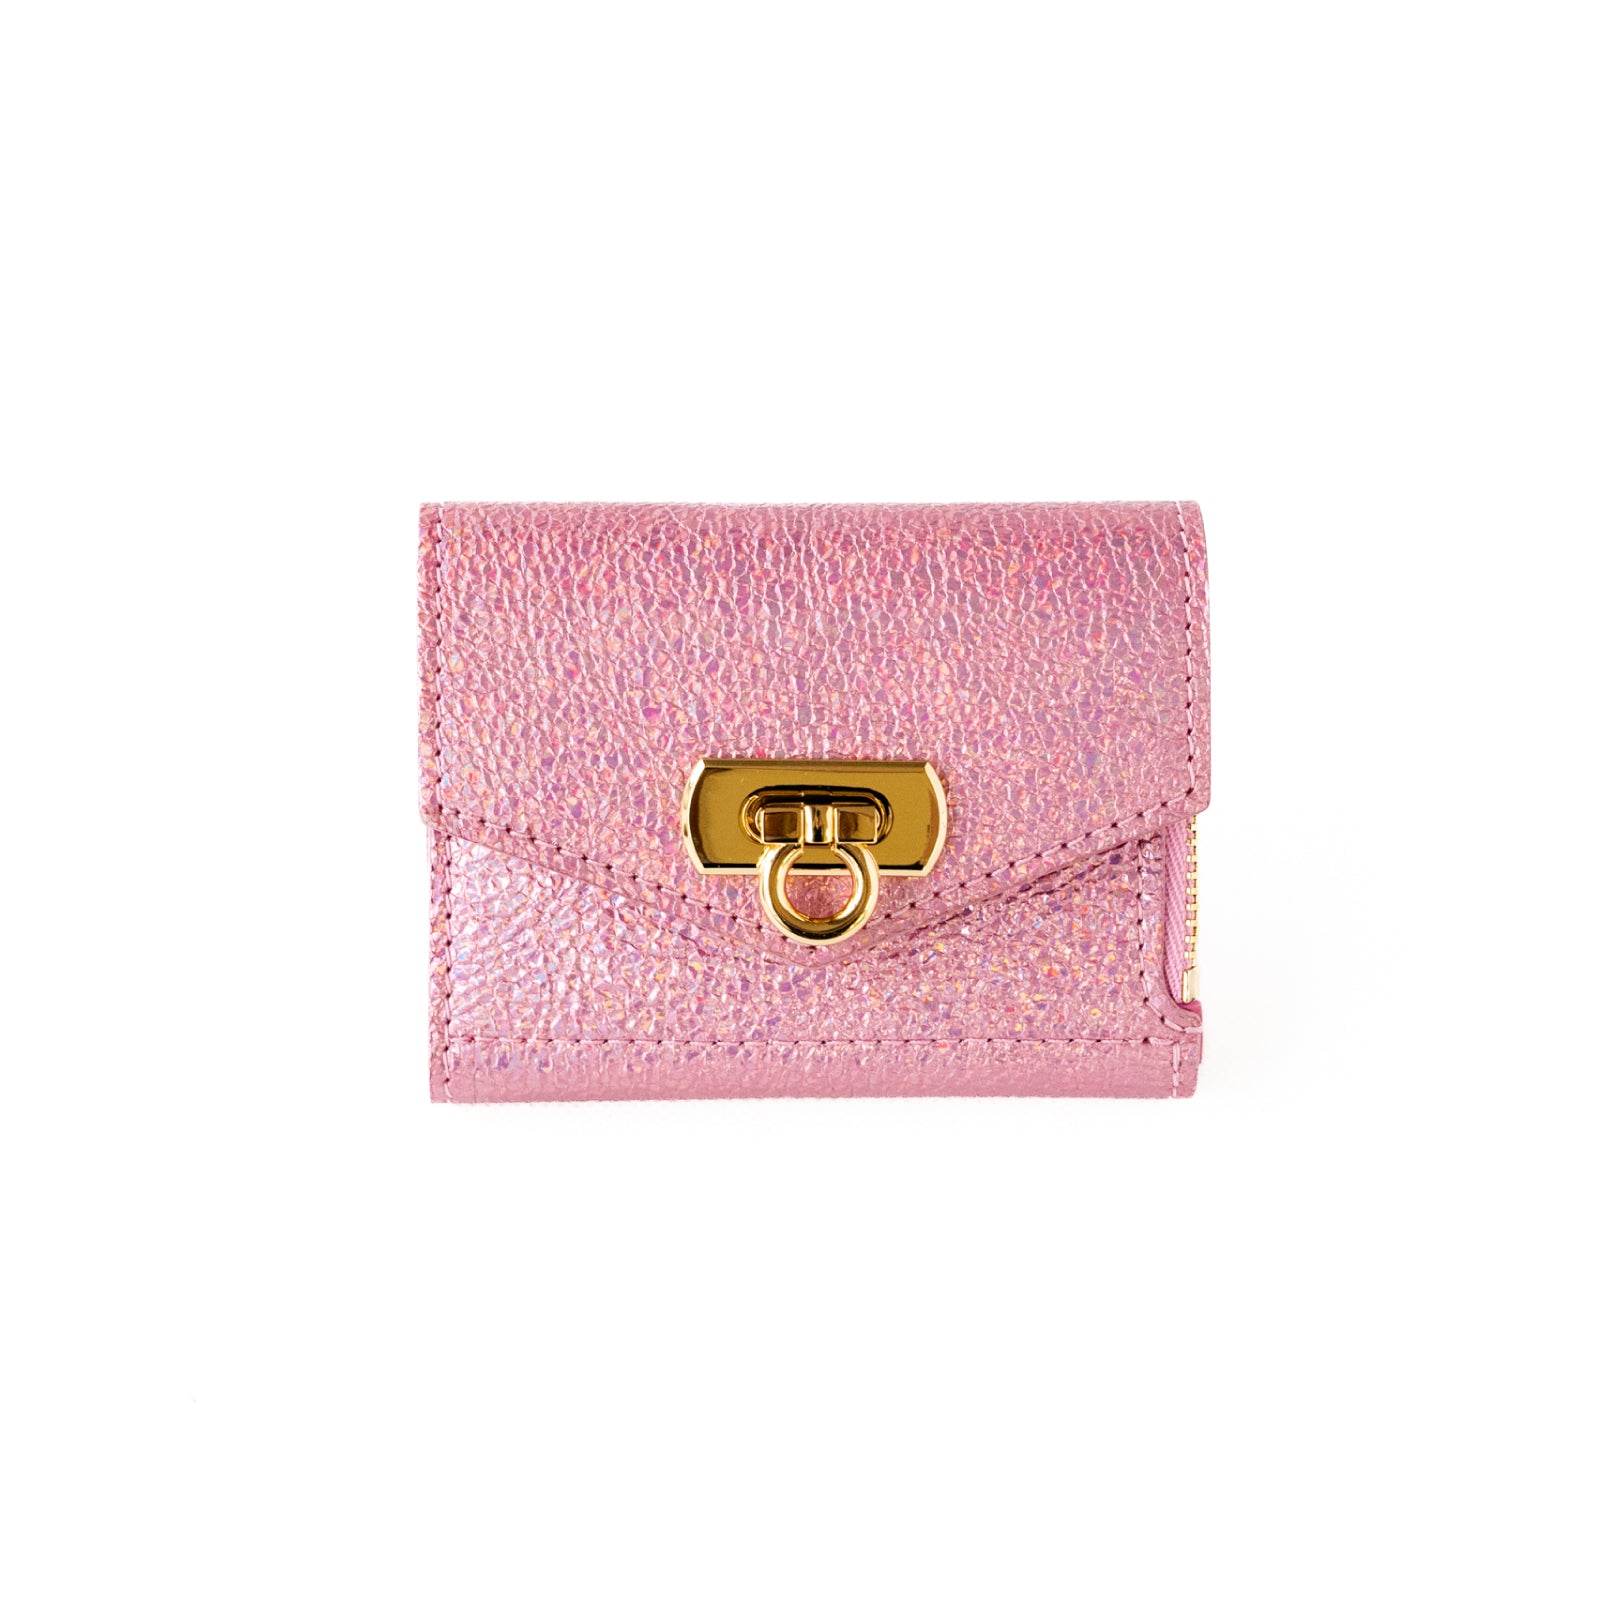 Handy Wallet Opera Prism Leather / Aurora Rose